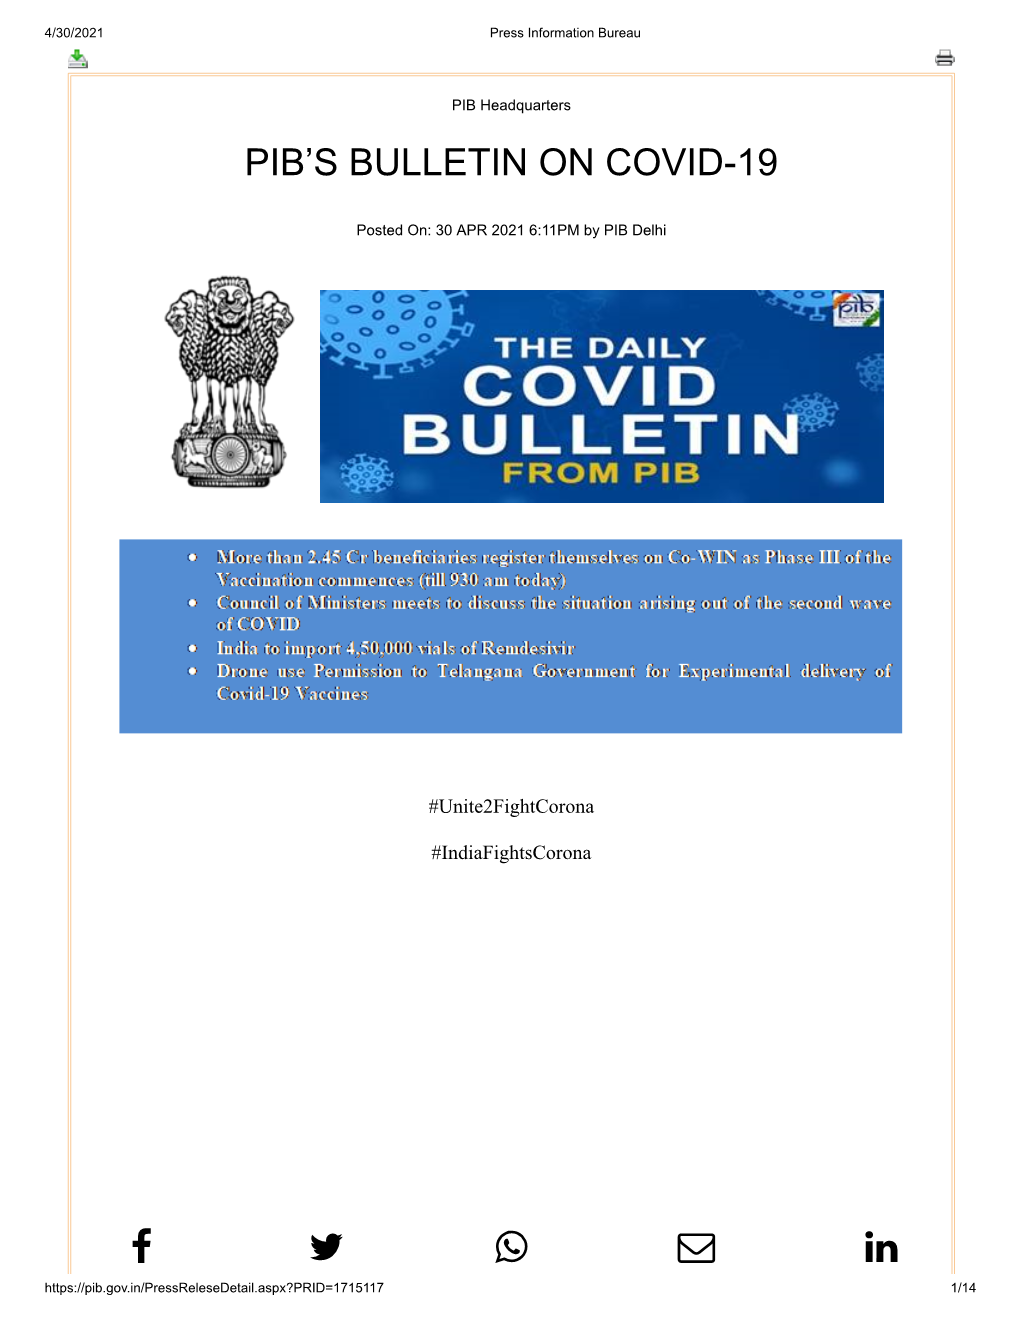 Pib's Bulletin on Covid-19